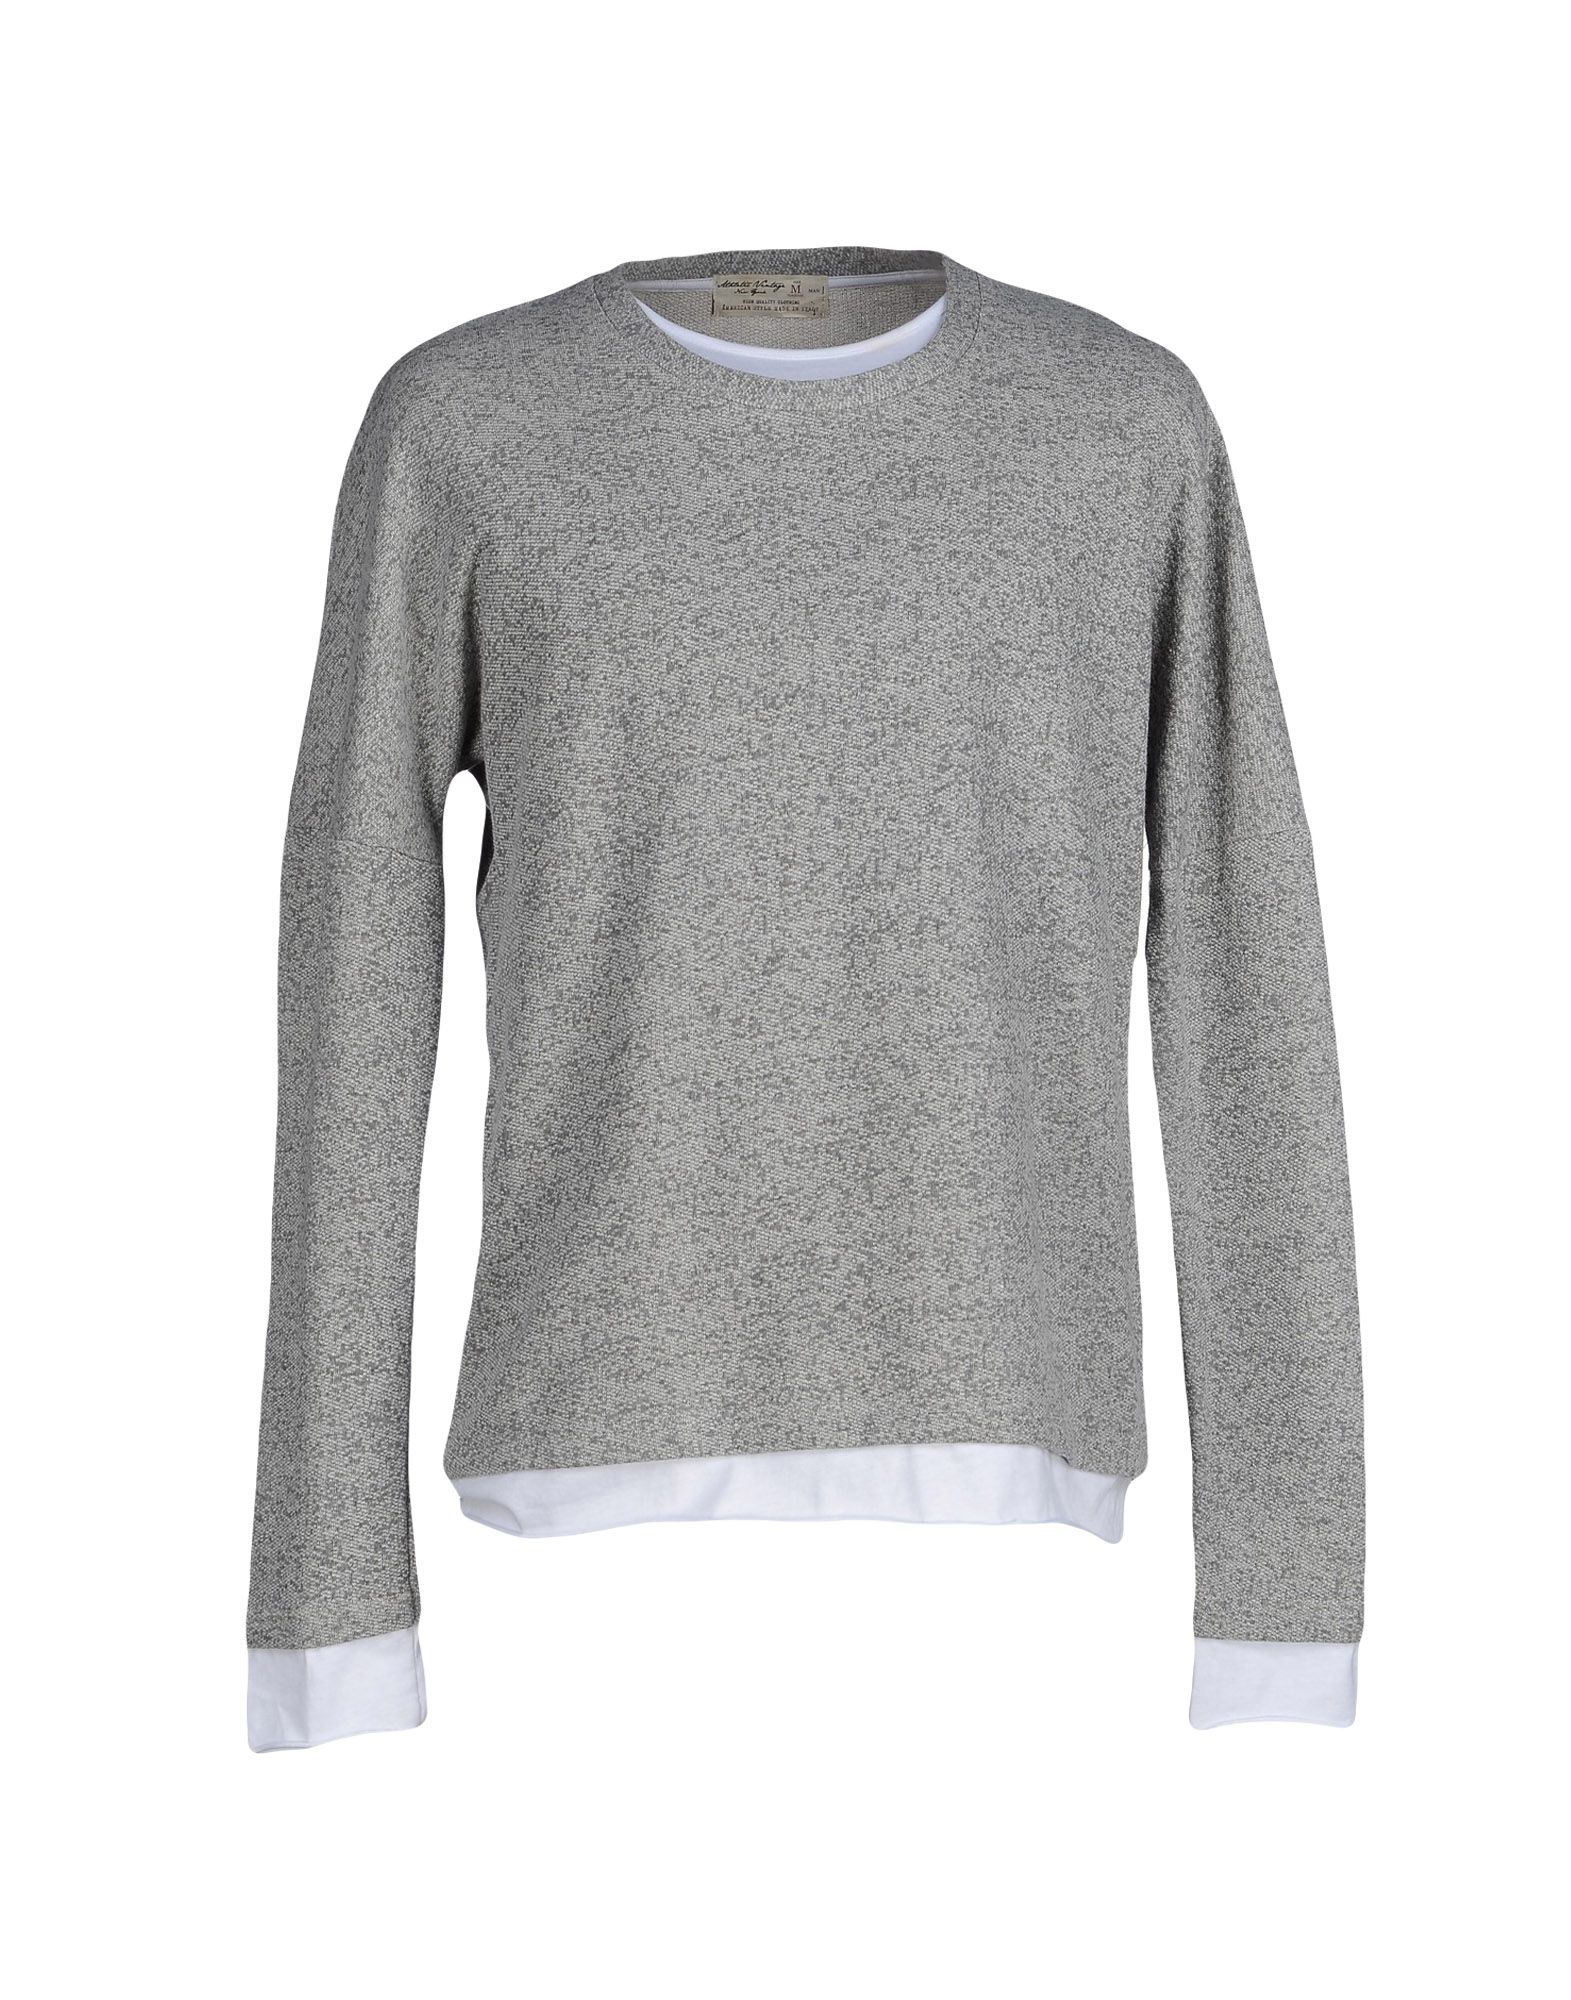 Lyst - Athletic Vintage Sweatshirt in Gray for Men